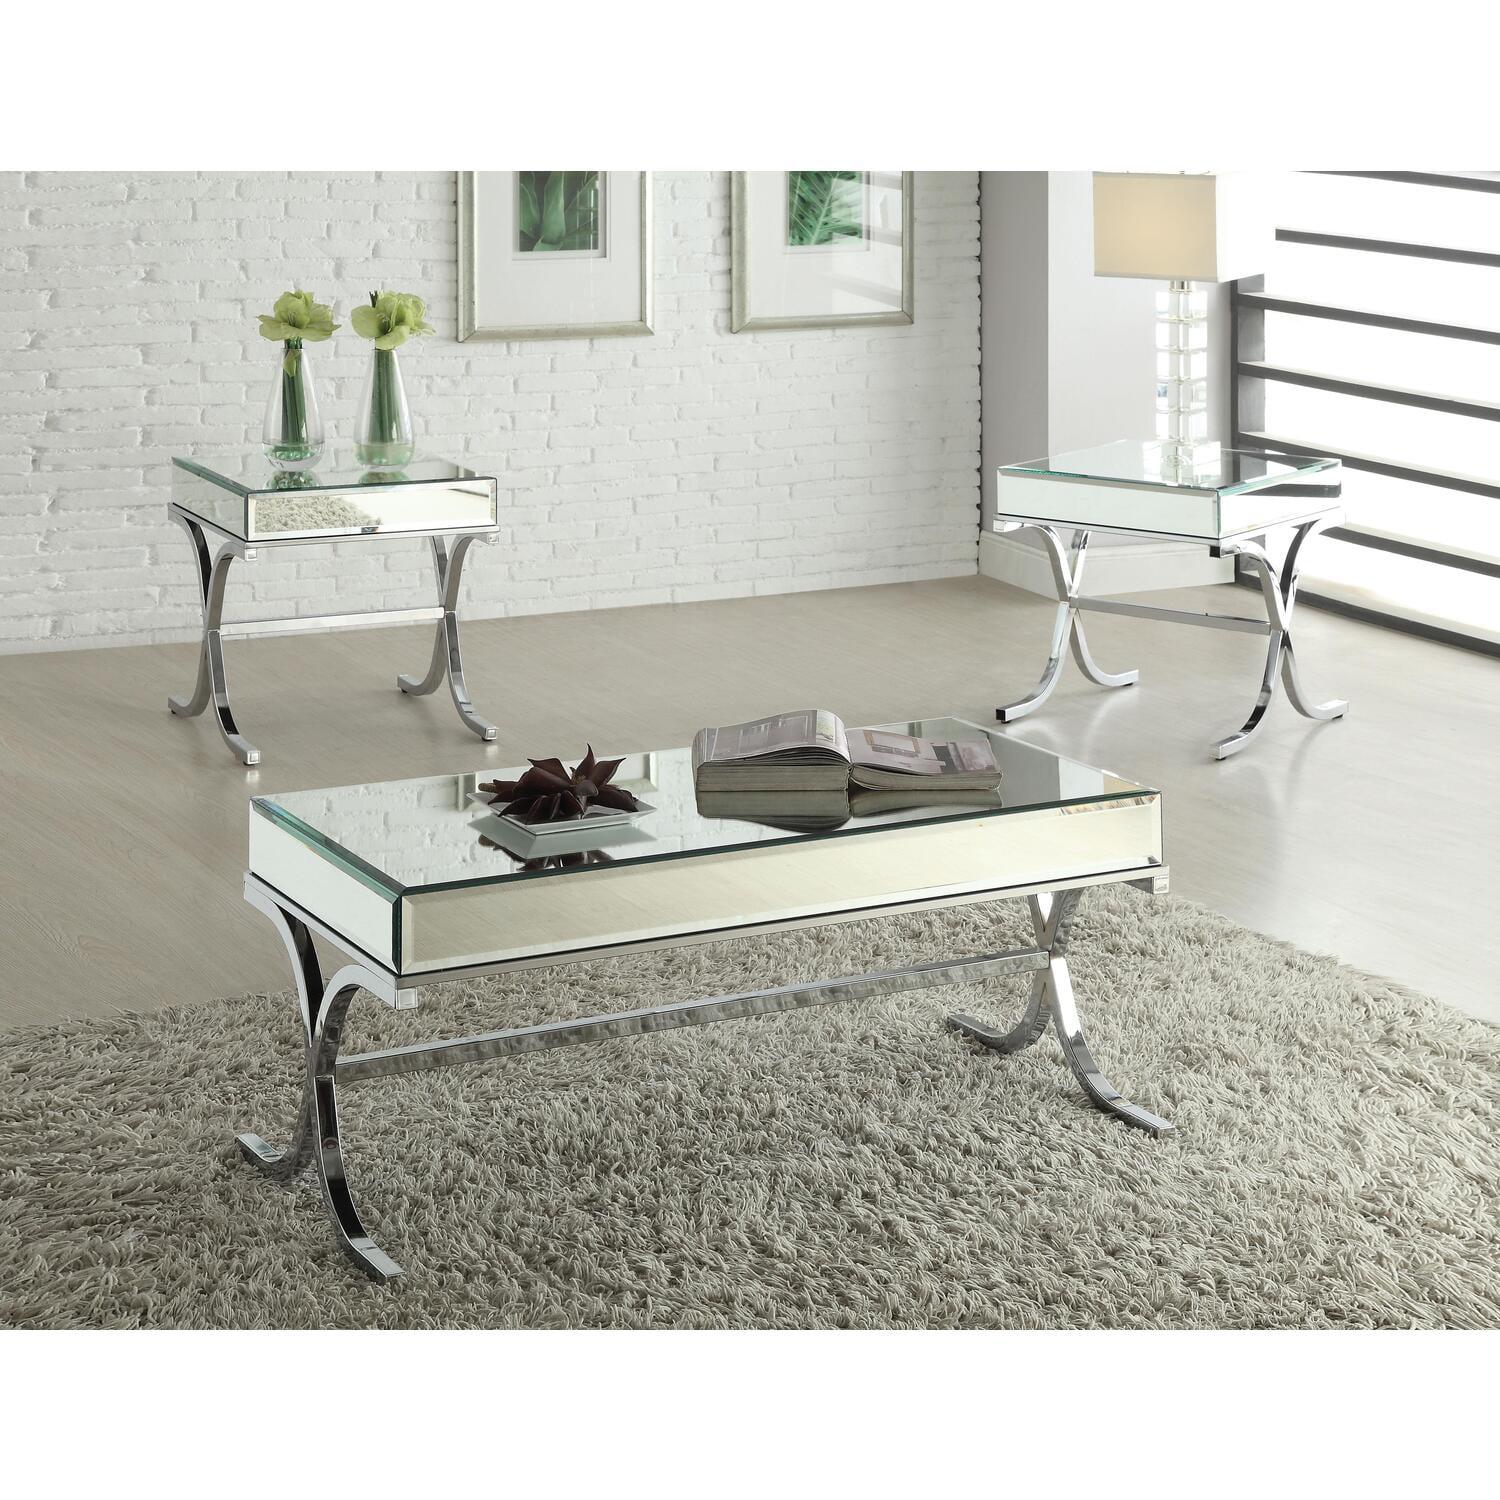 Elegant Rectangular Mirrored Coffee Table with Chrome Metal Base